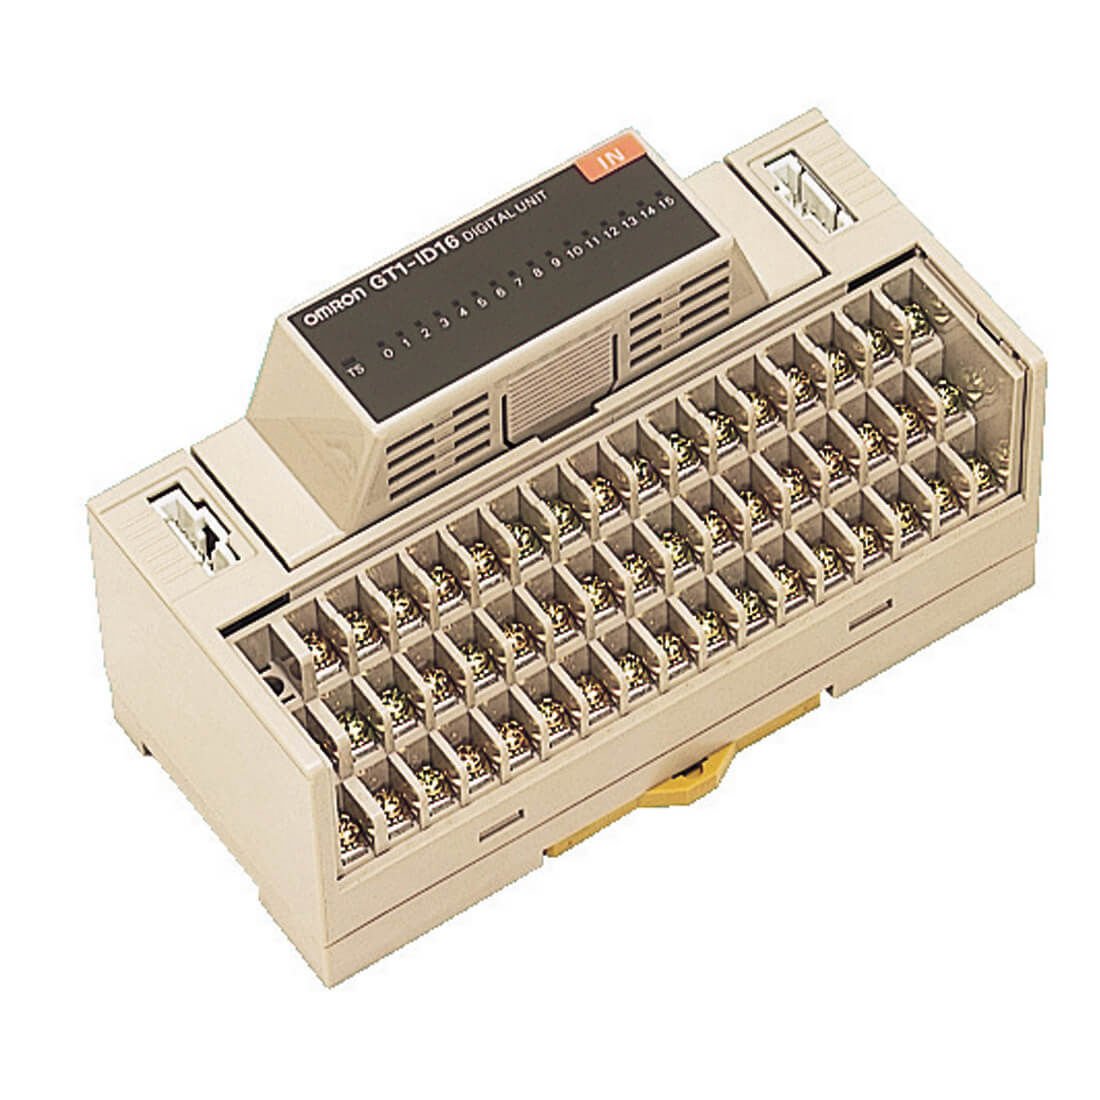 Omron - GT1-ID16  Multiple I/O remote terminal, 16x 24 VDC inputs, NPN